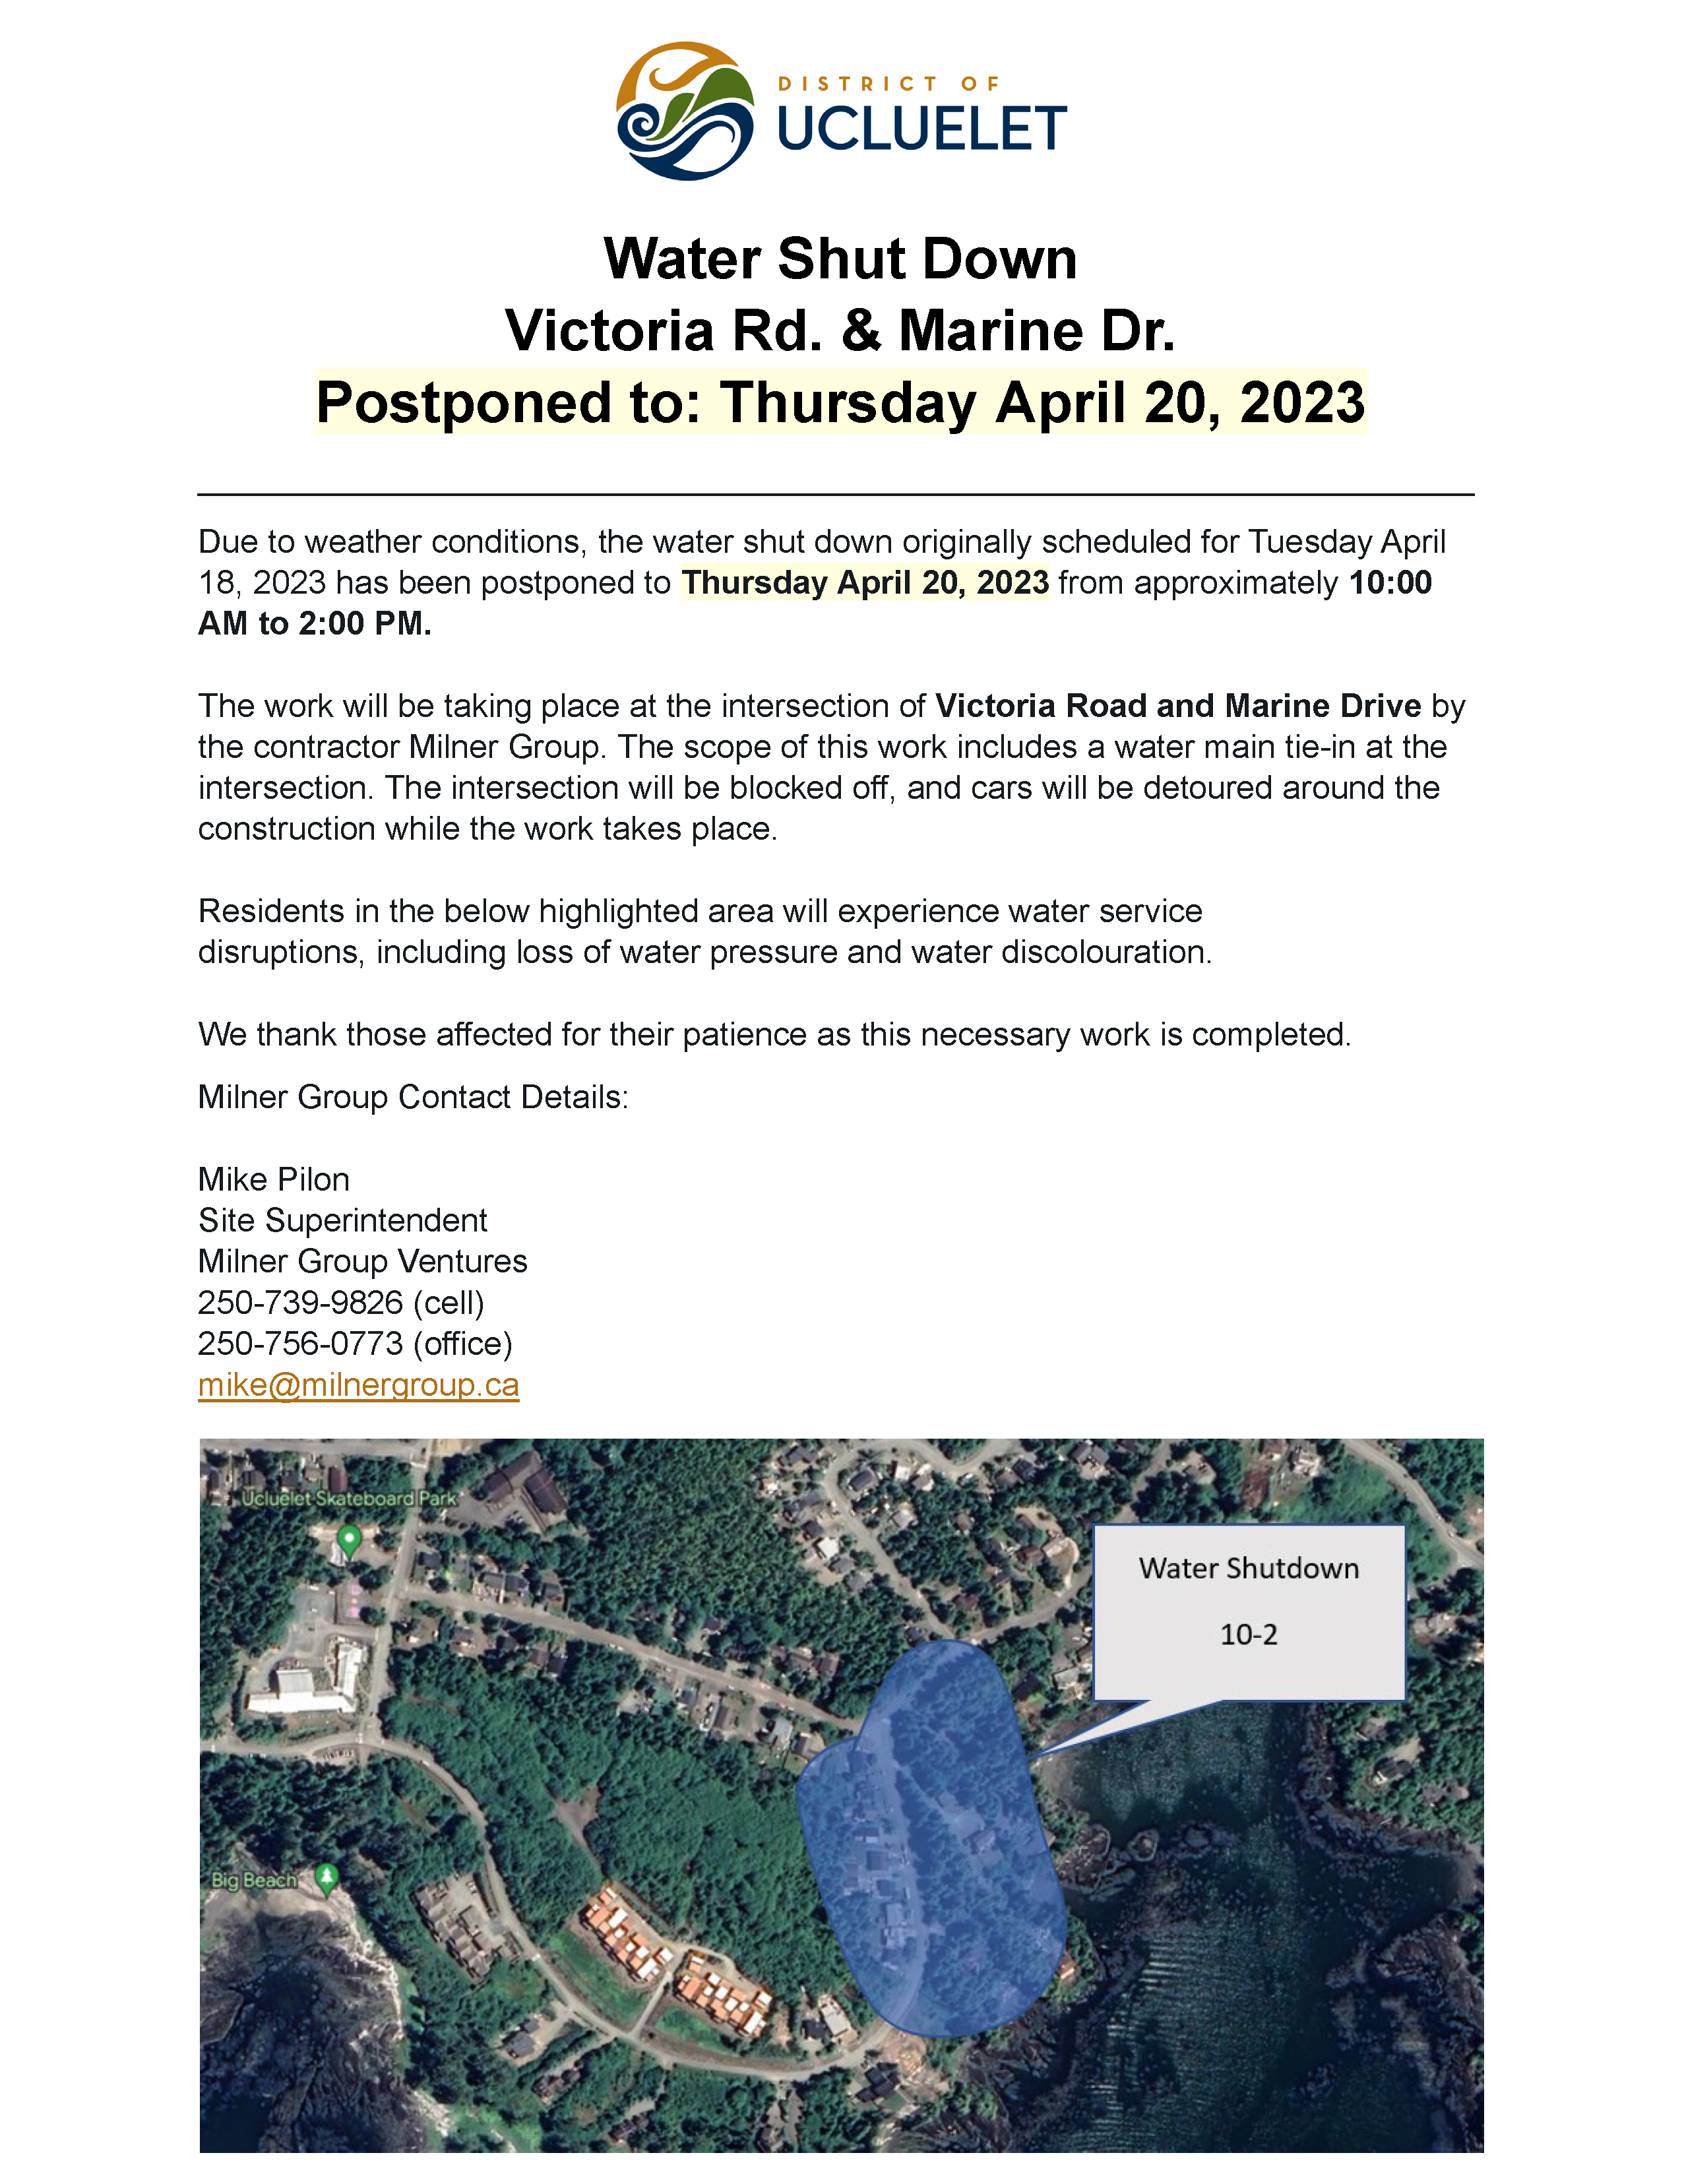 Water Shut Down Thursday April 20 2023 Community Notice